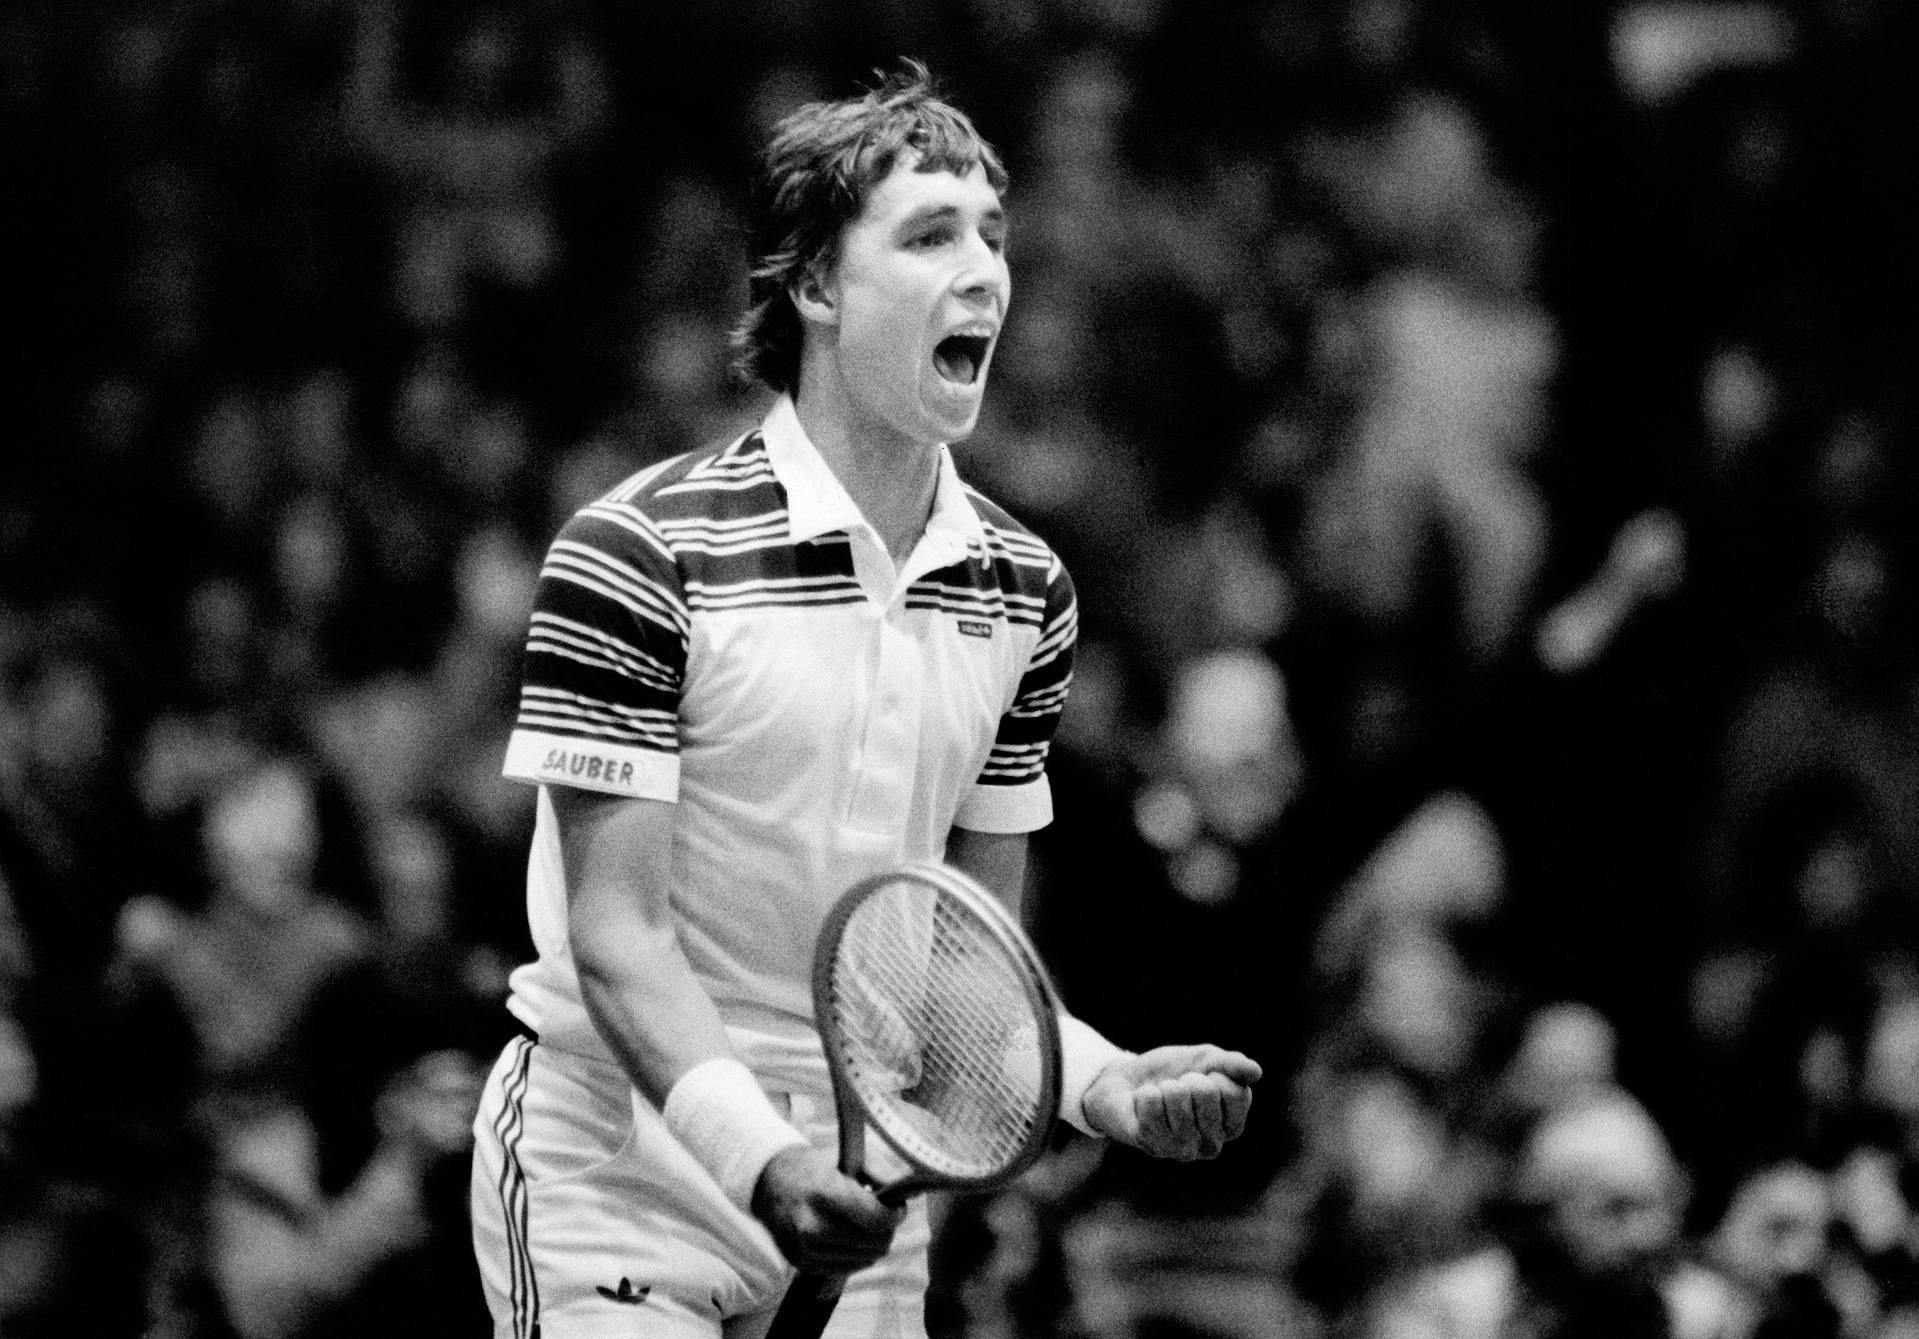 Ivan Lendl in the Davis Cup Final 1980